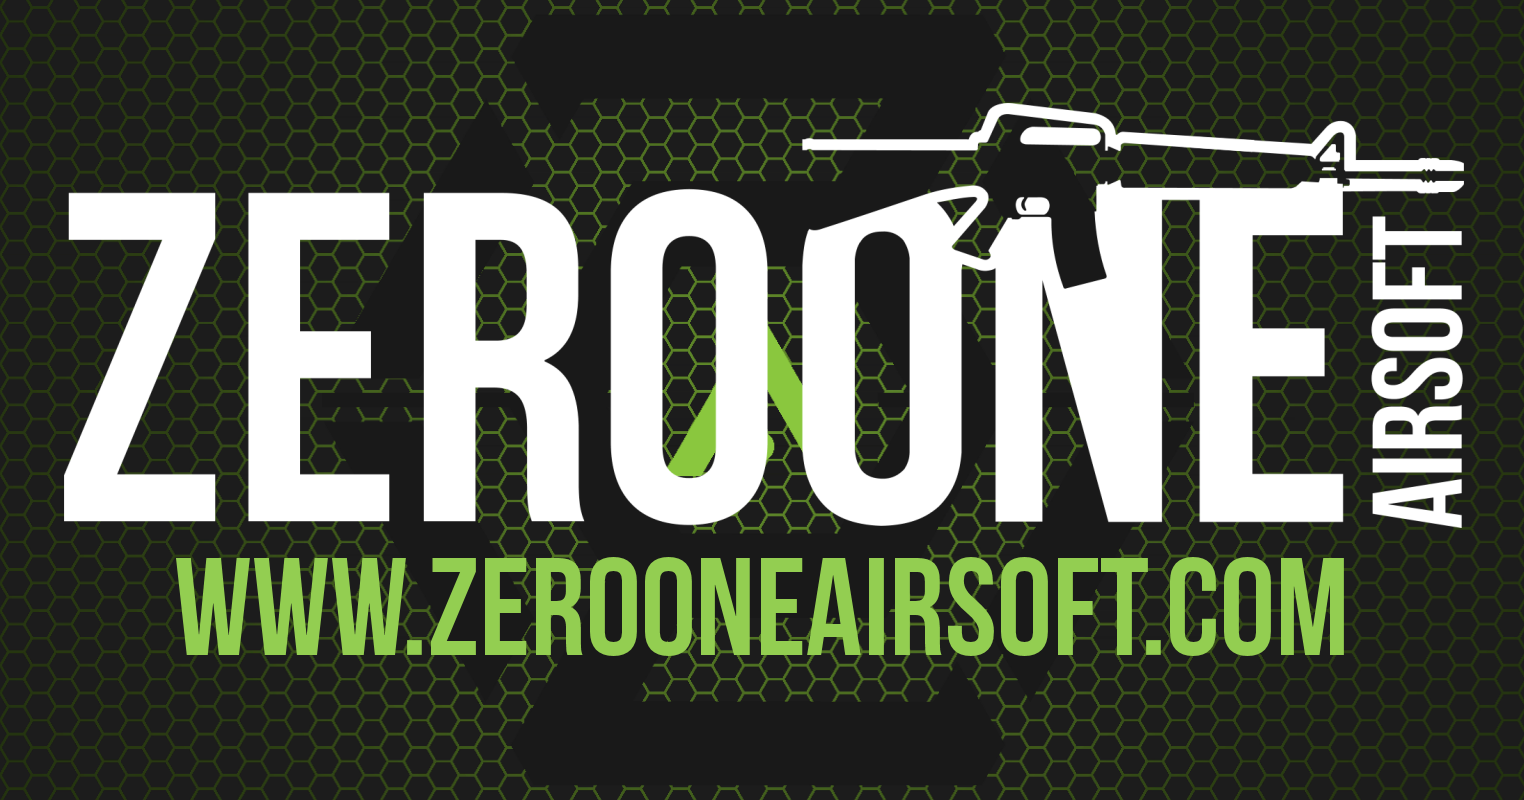 www.zerooneairsoft.com